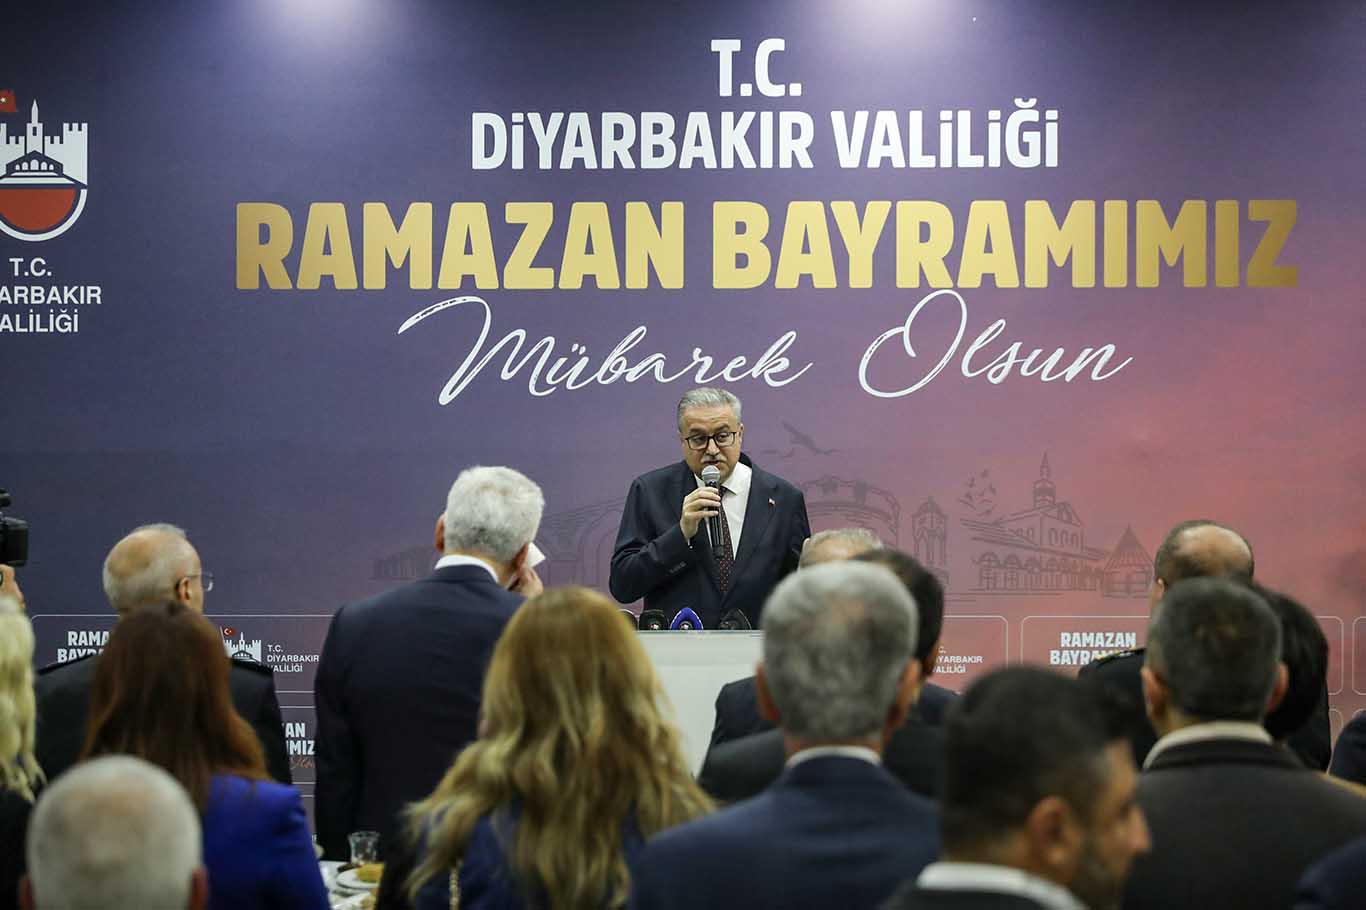 Diyarbakır'da Bayramlaşma Programı 6